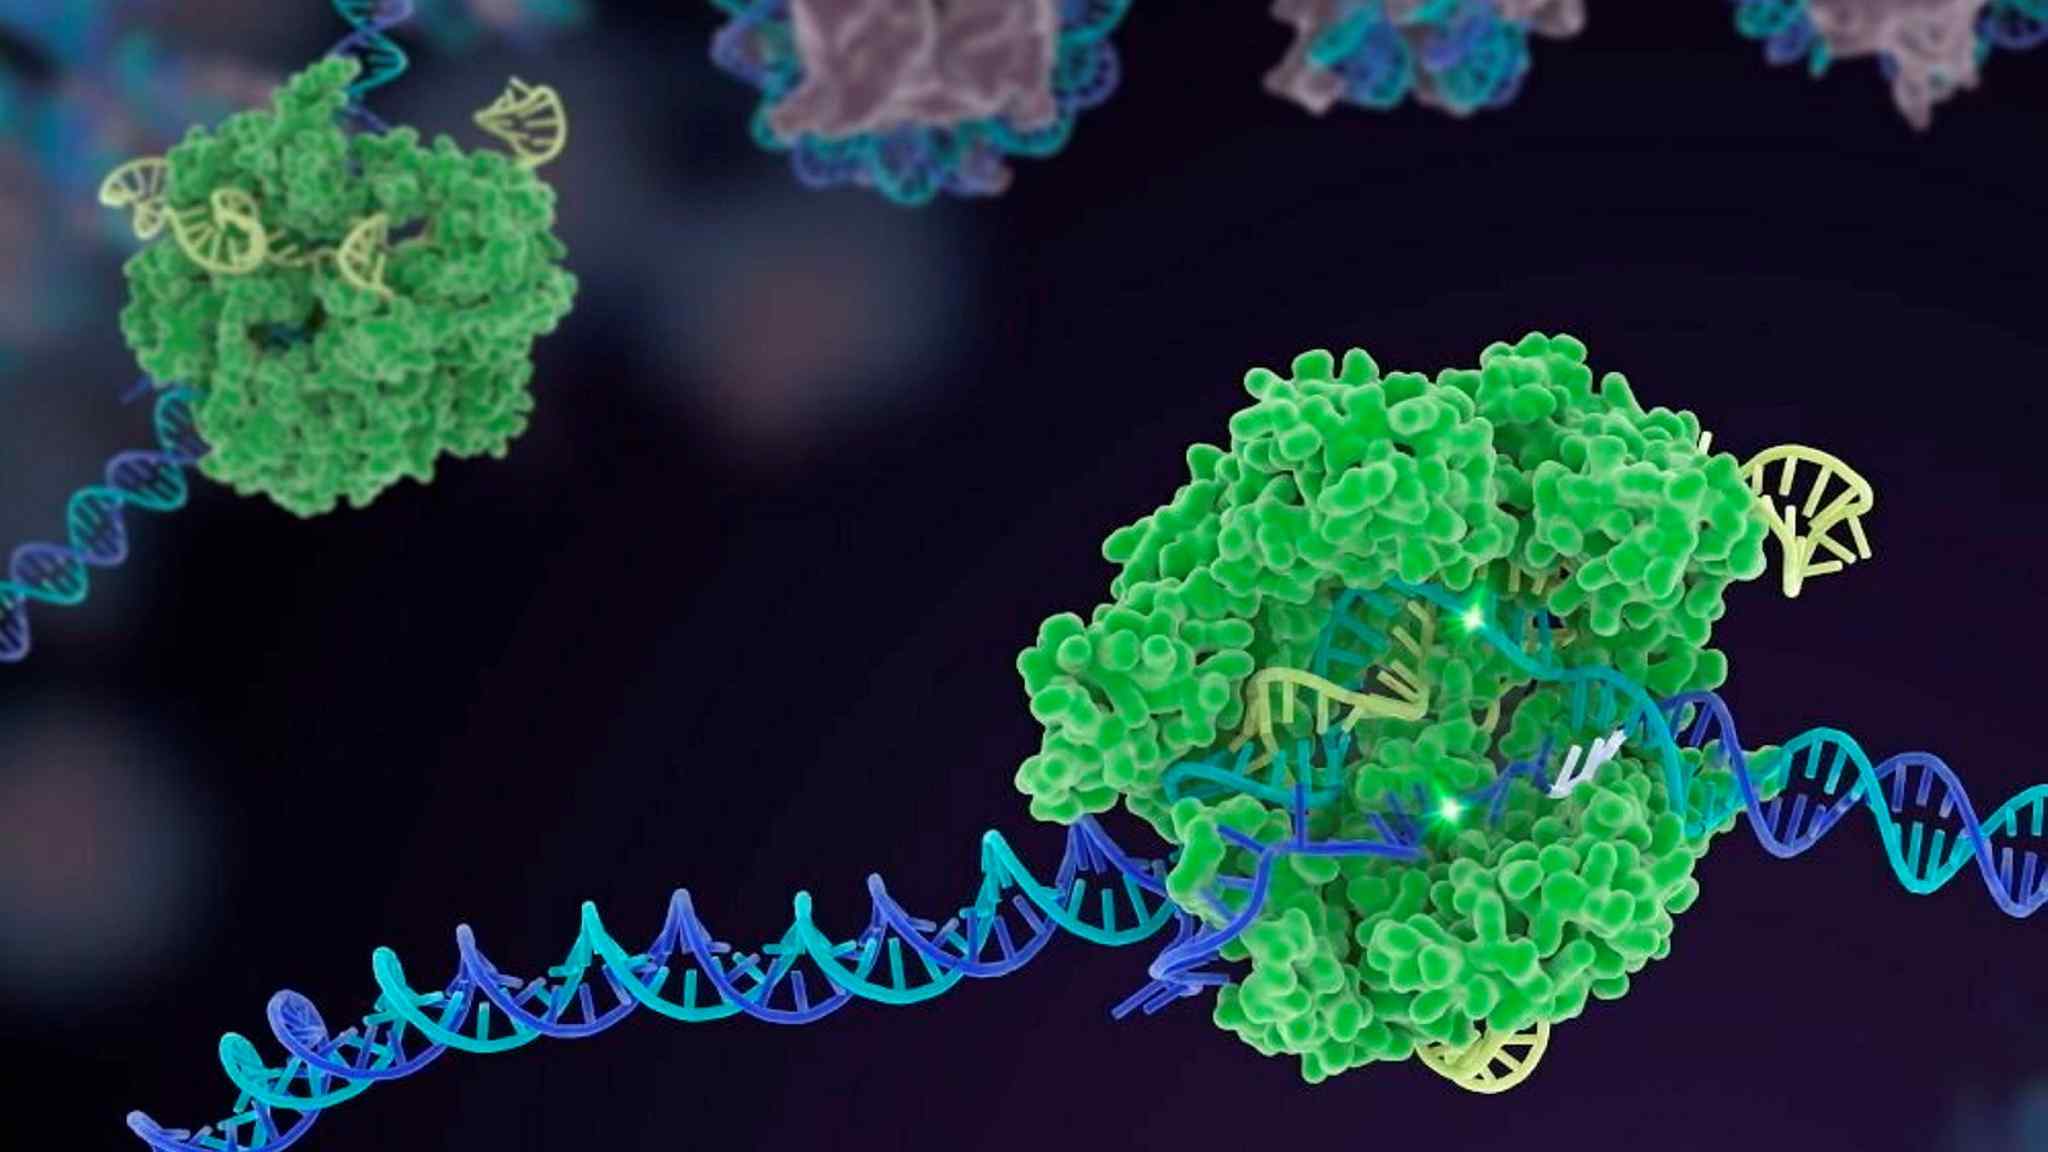 Revolutionary Crispr gene editing speeds from lab to treatment room